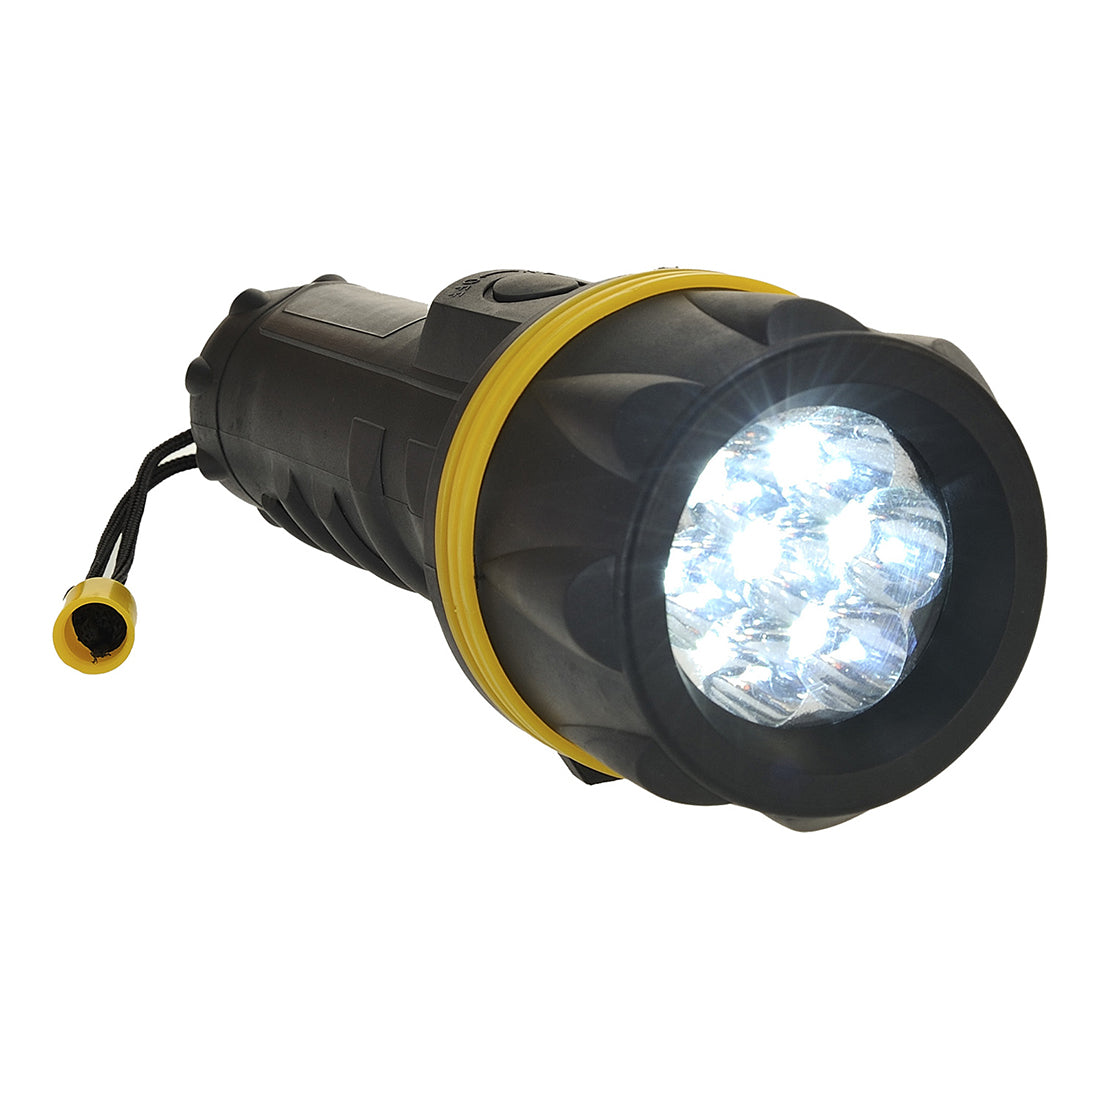 Portwest PA60 7 LED Rubber Torch 1#colour_yellow-black